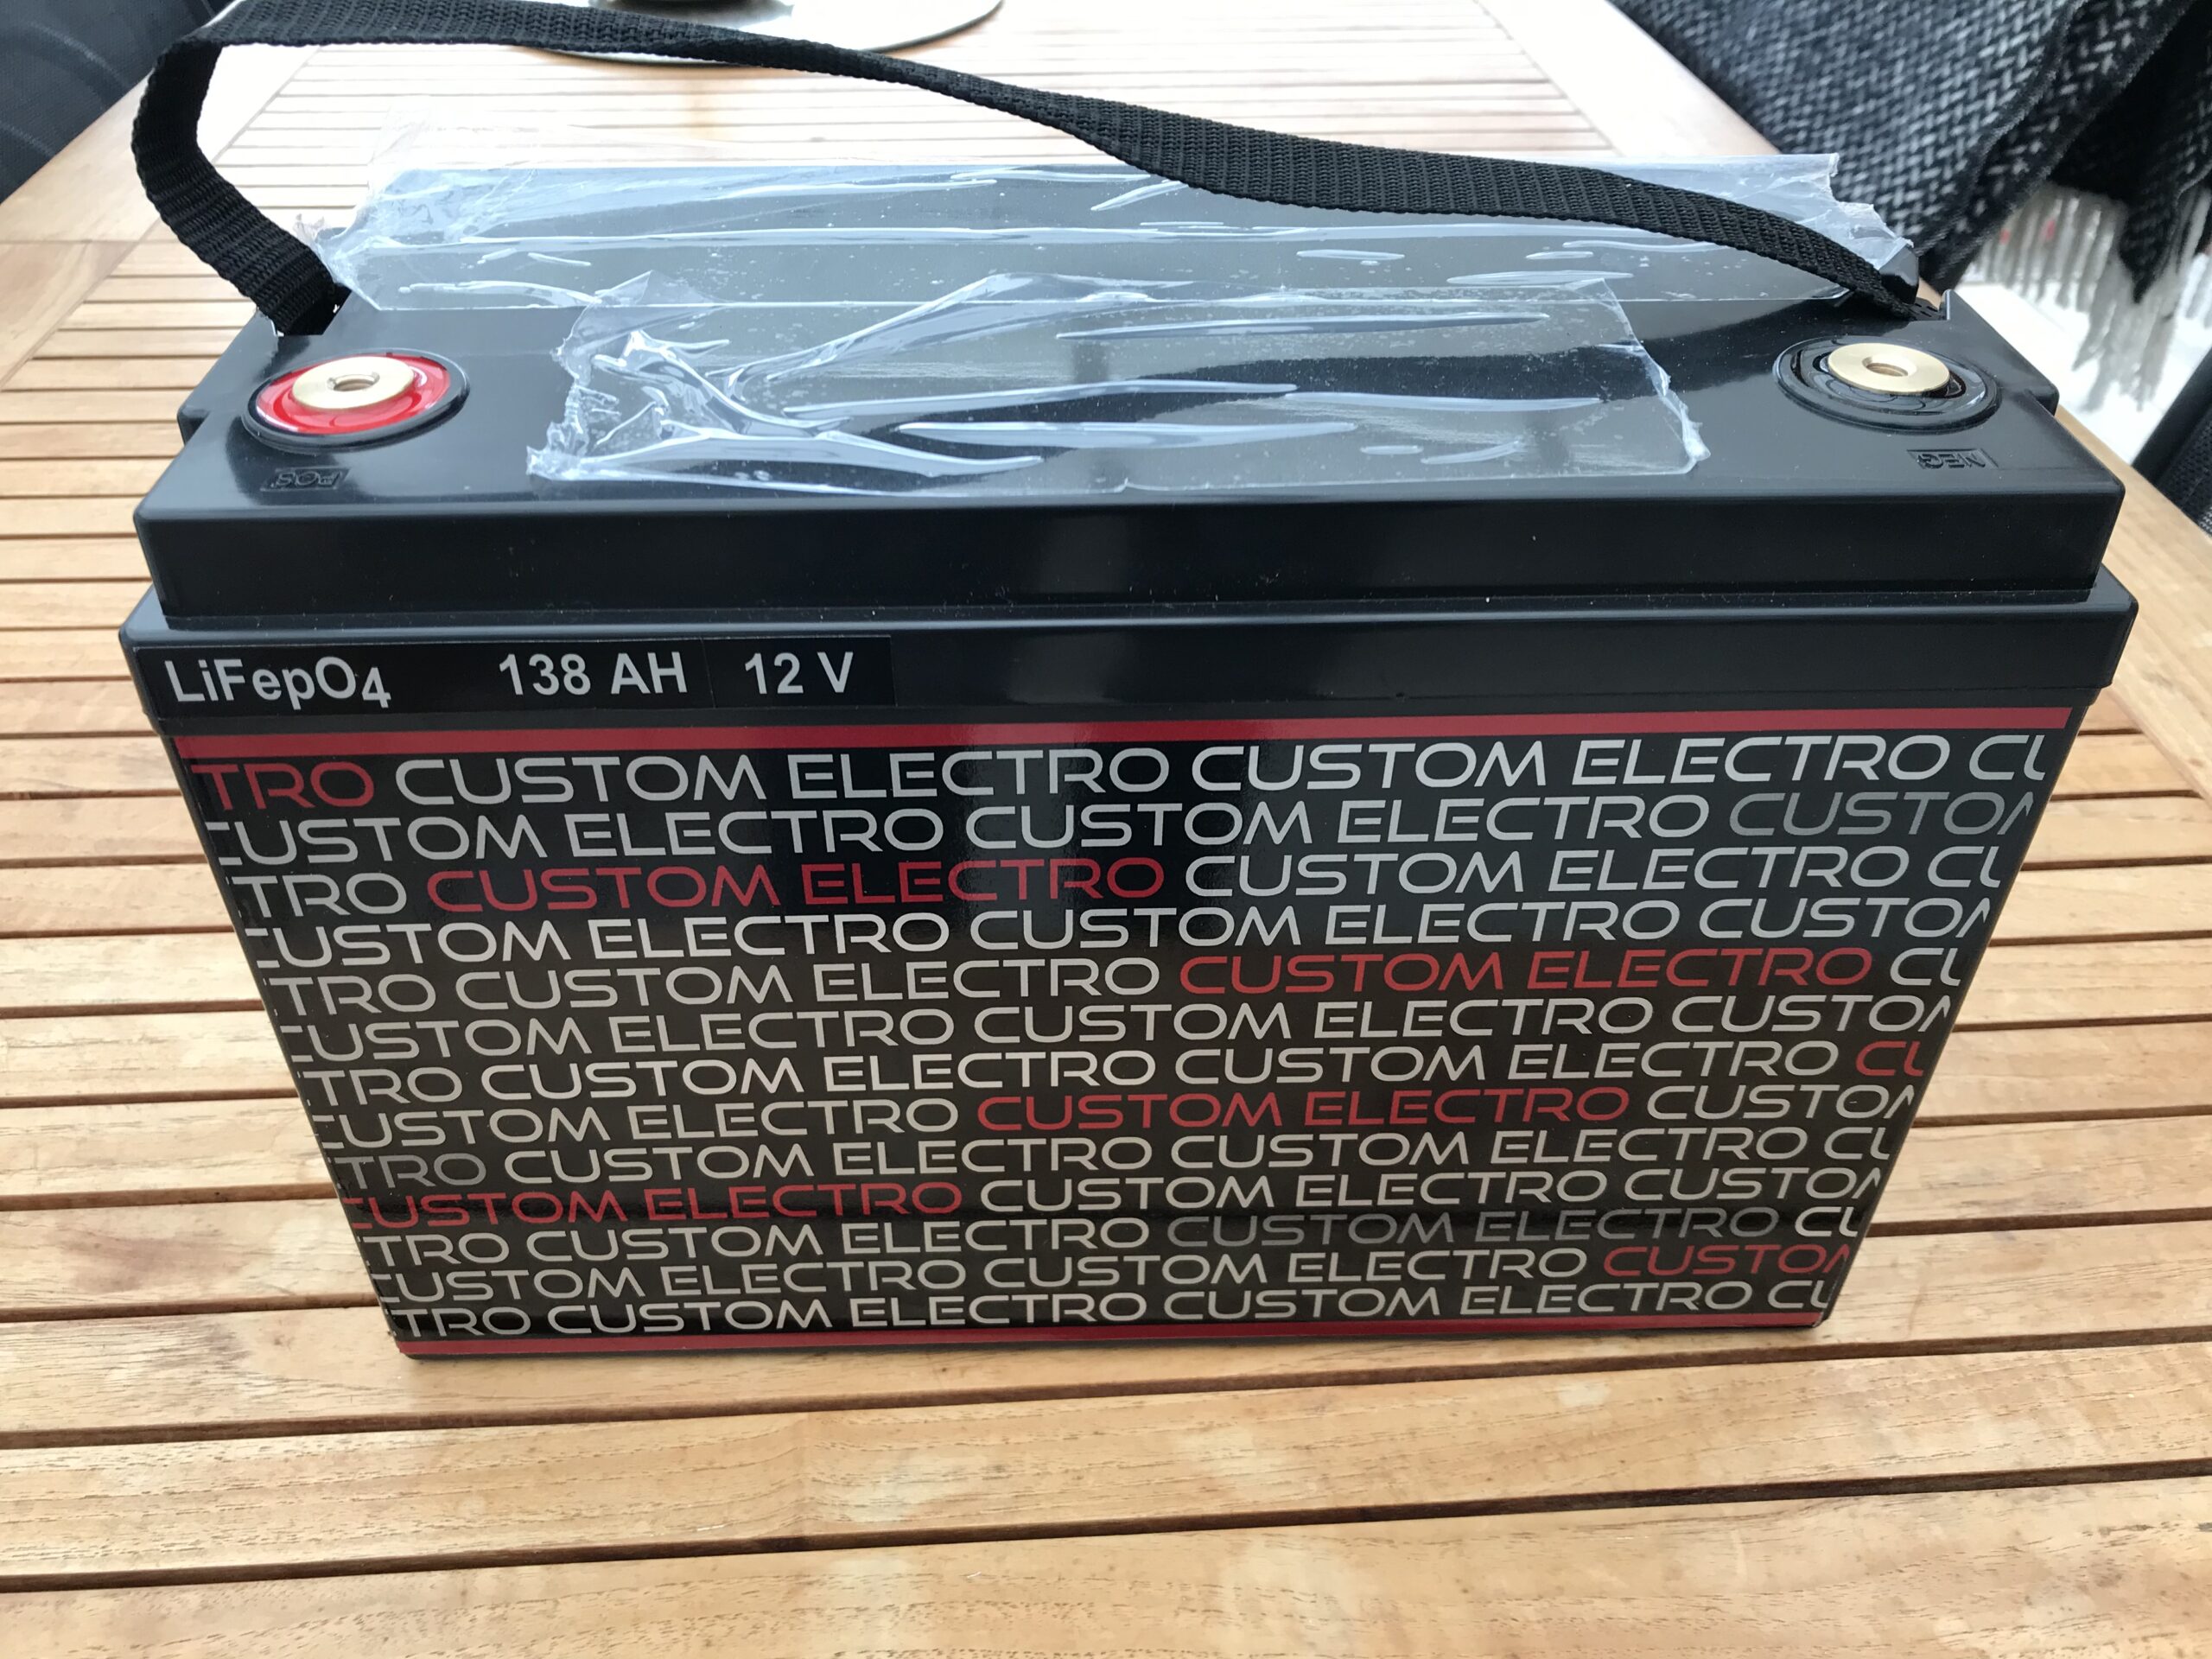 You are currently viewing 12 volt Litiumjonbatteri Custom Electro  i båten.